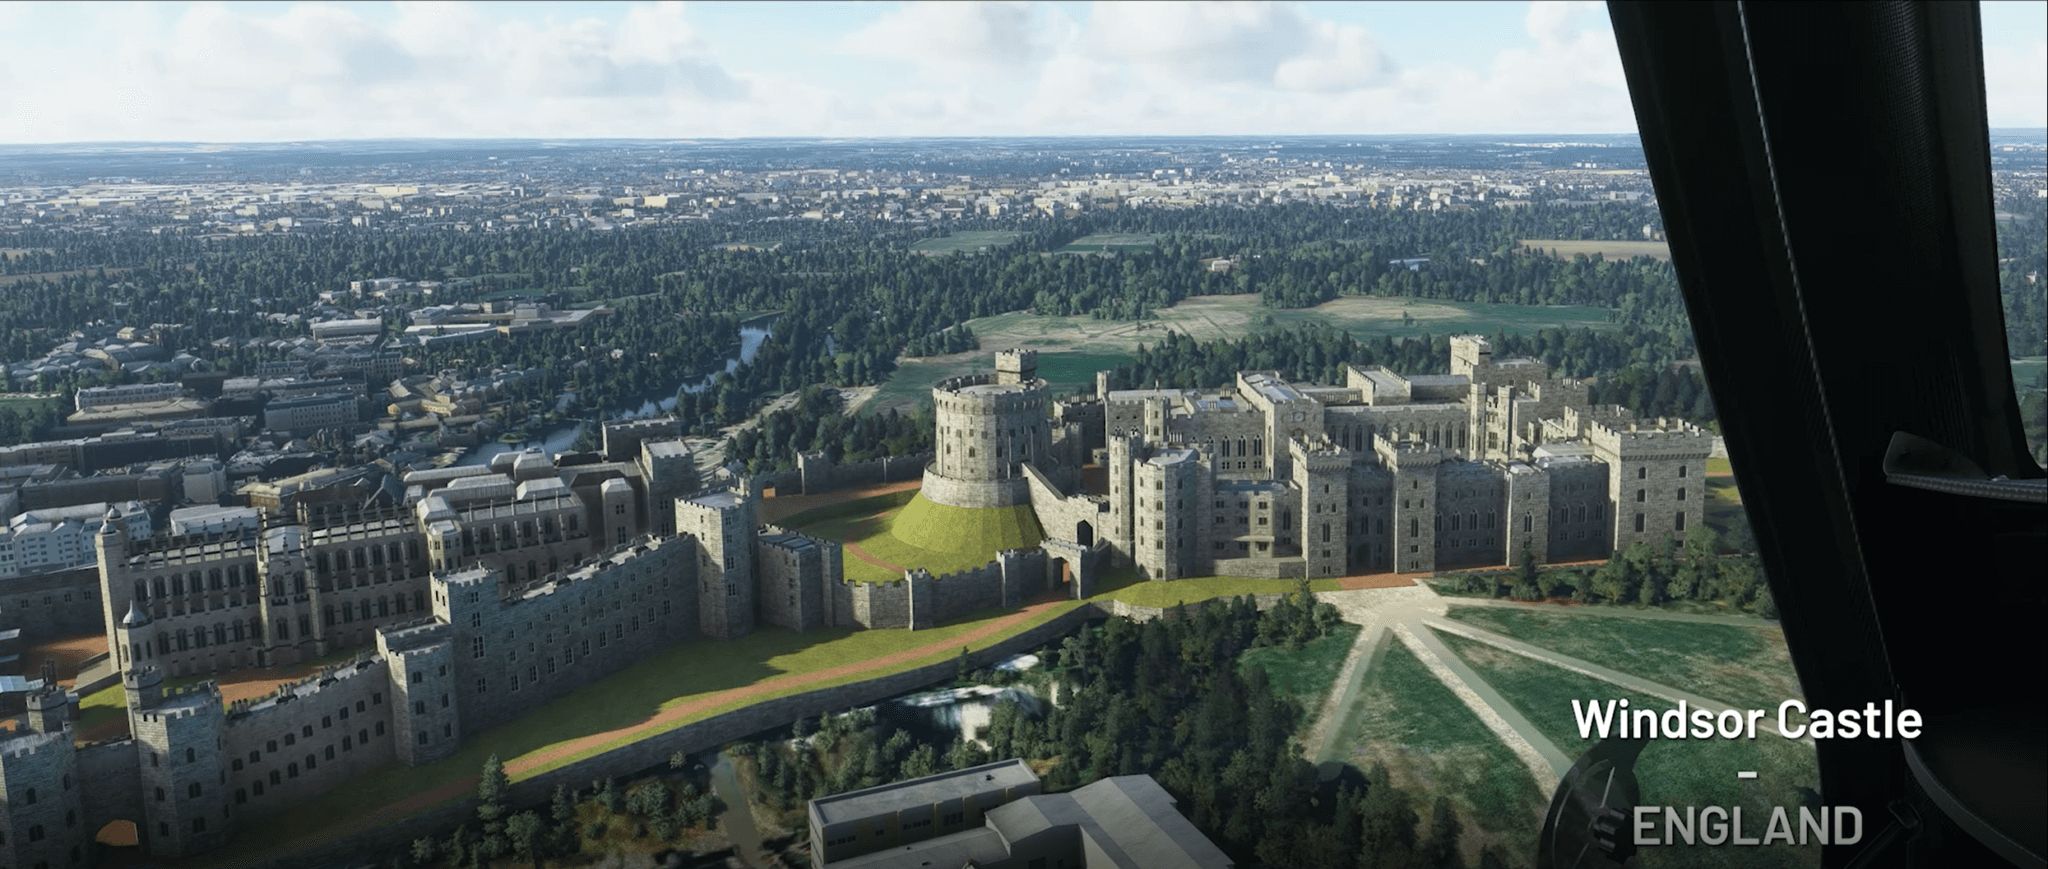 England's Windsor Castle added to Microsoft Flight Simulator